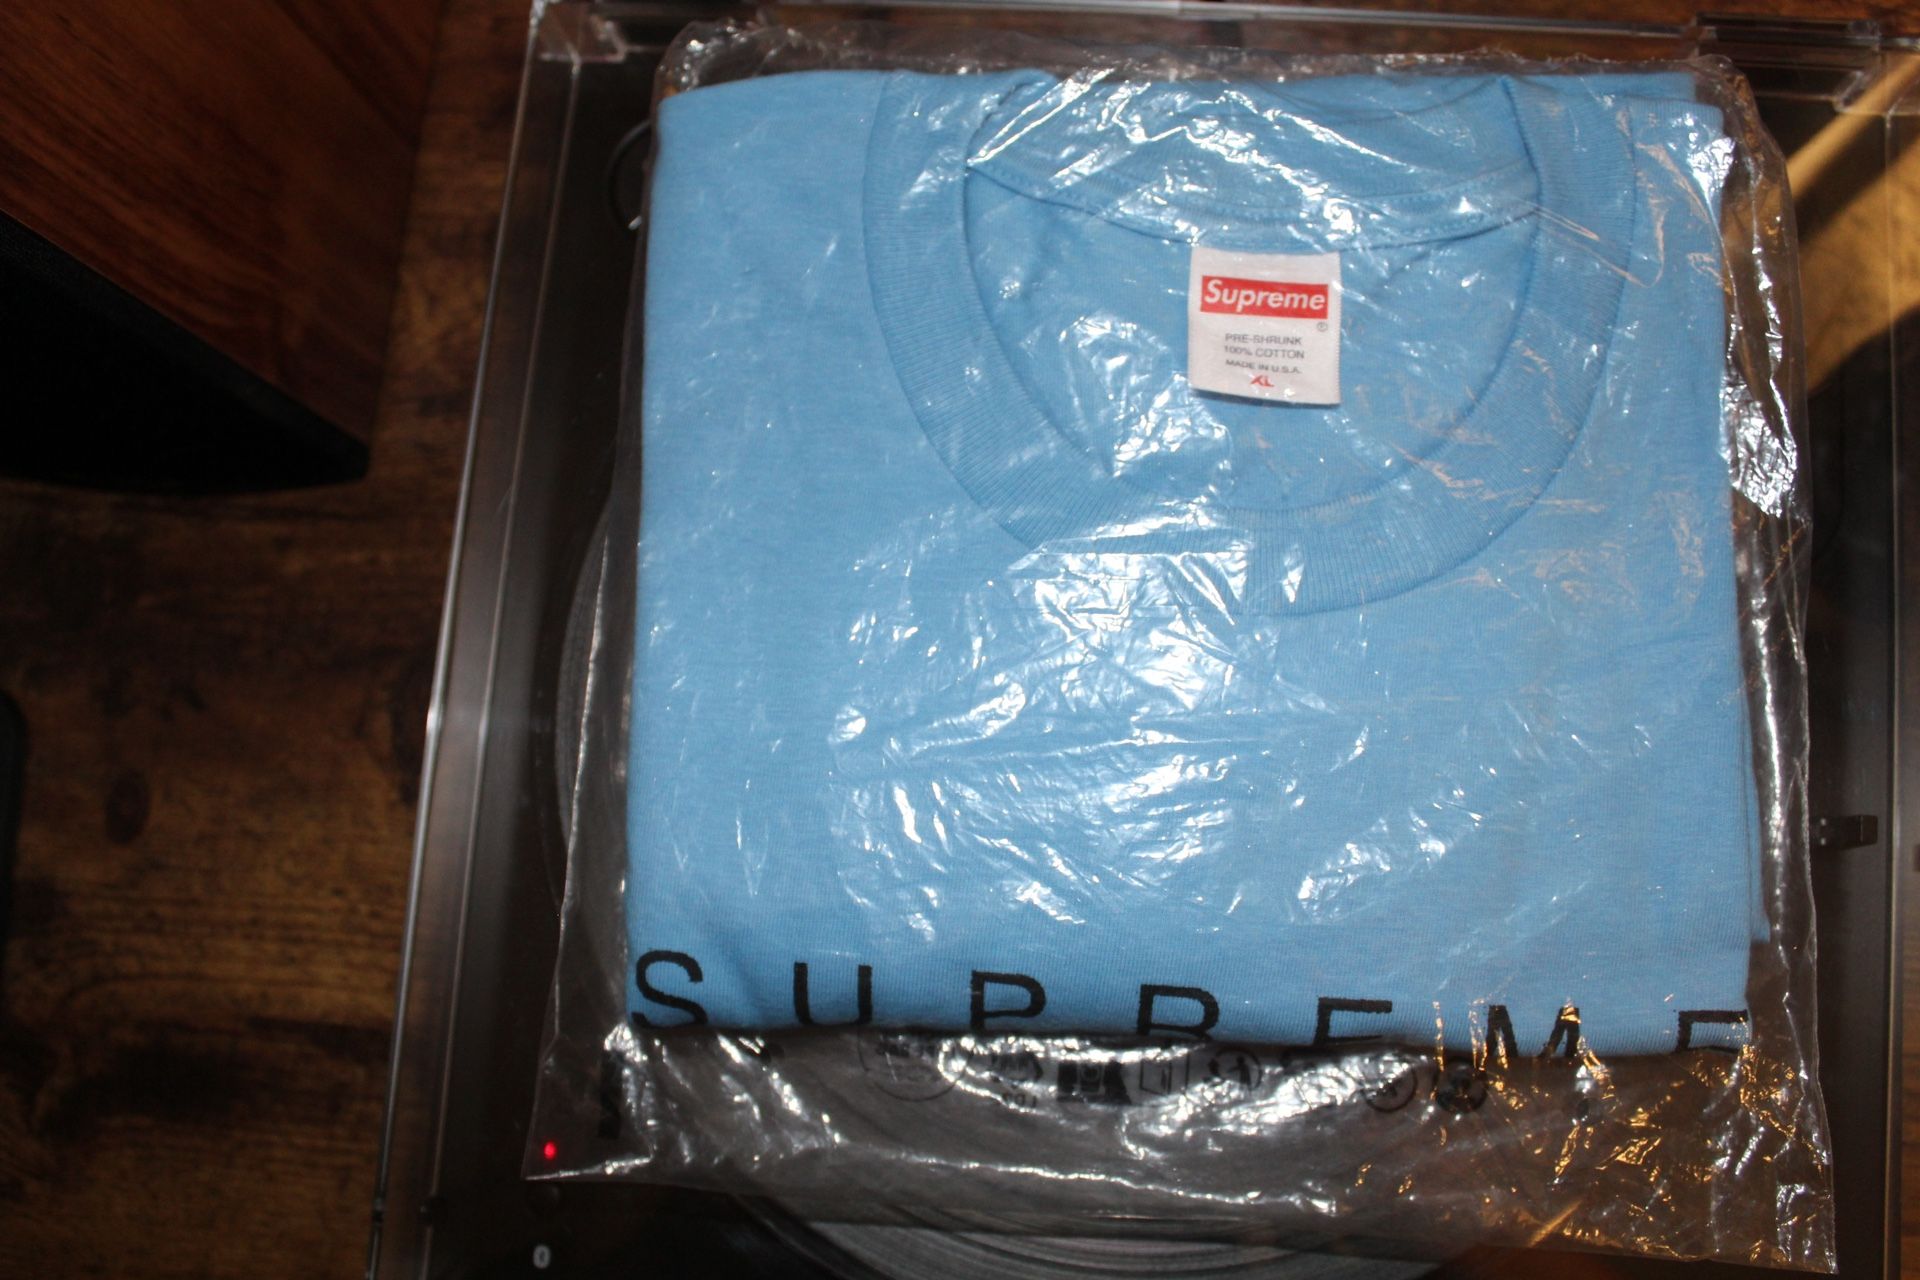 Supreme “Rolph” Shirt Brand New